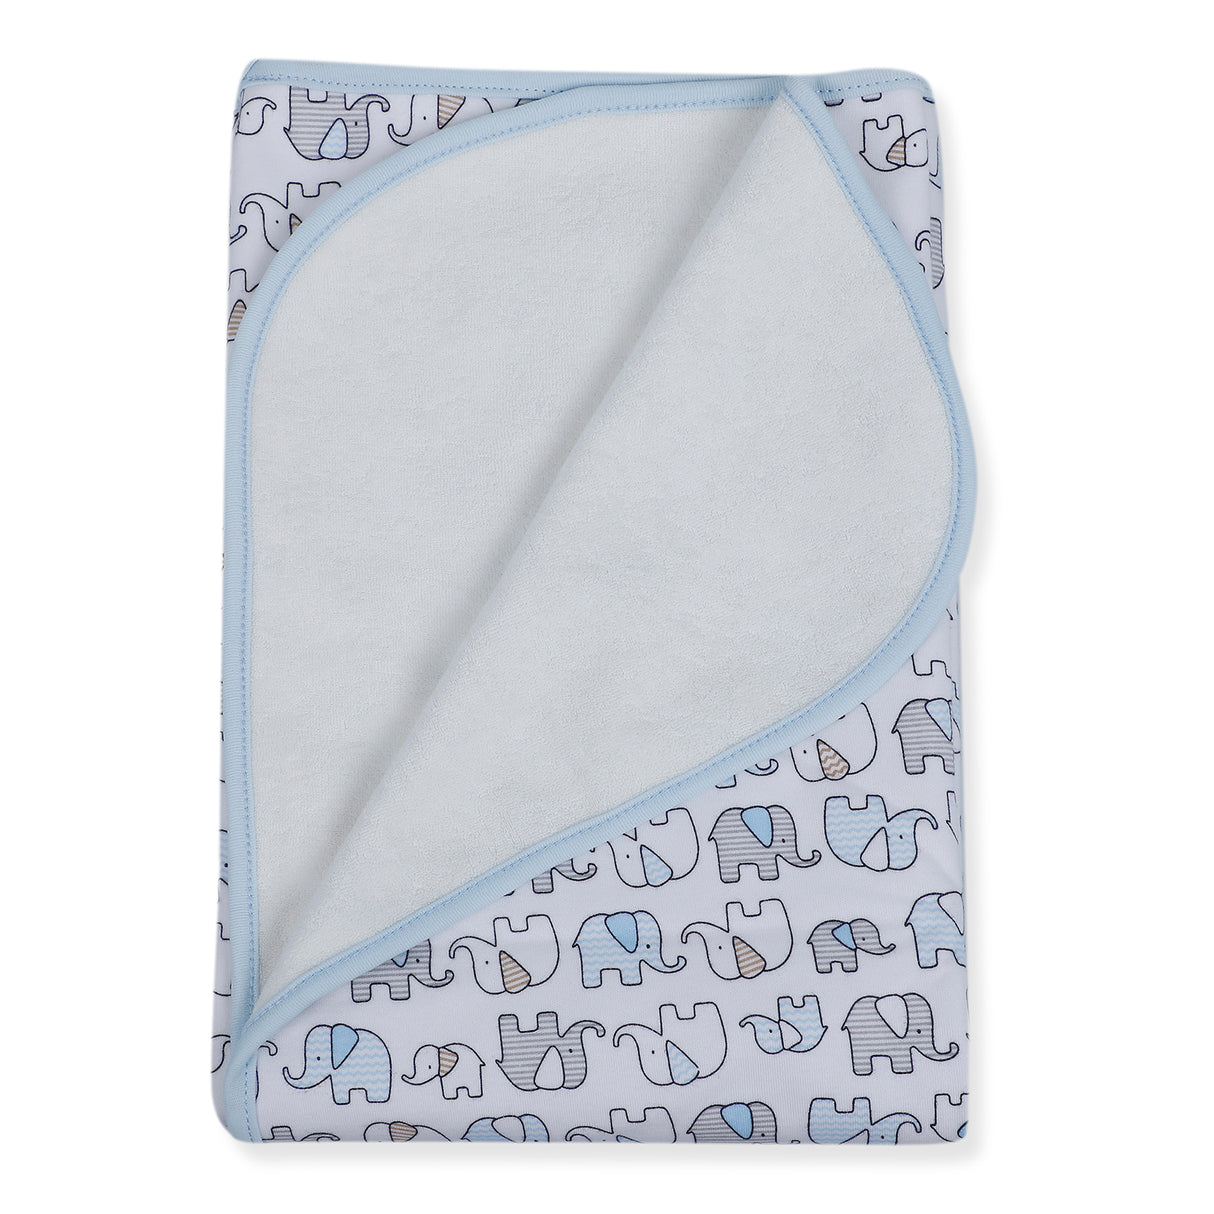 Moms Care Waterproof Bed Protector Dry Sheet